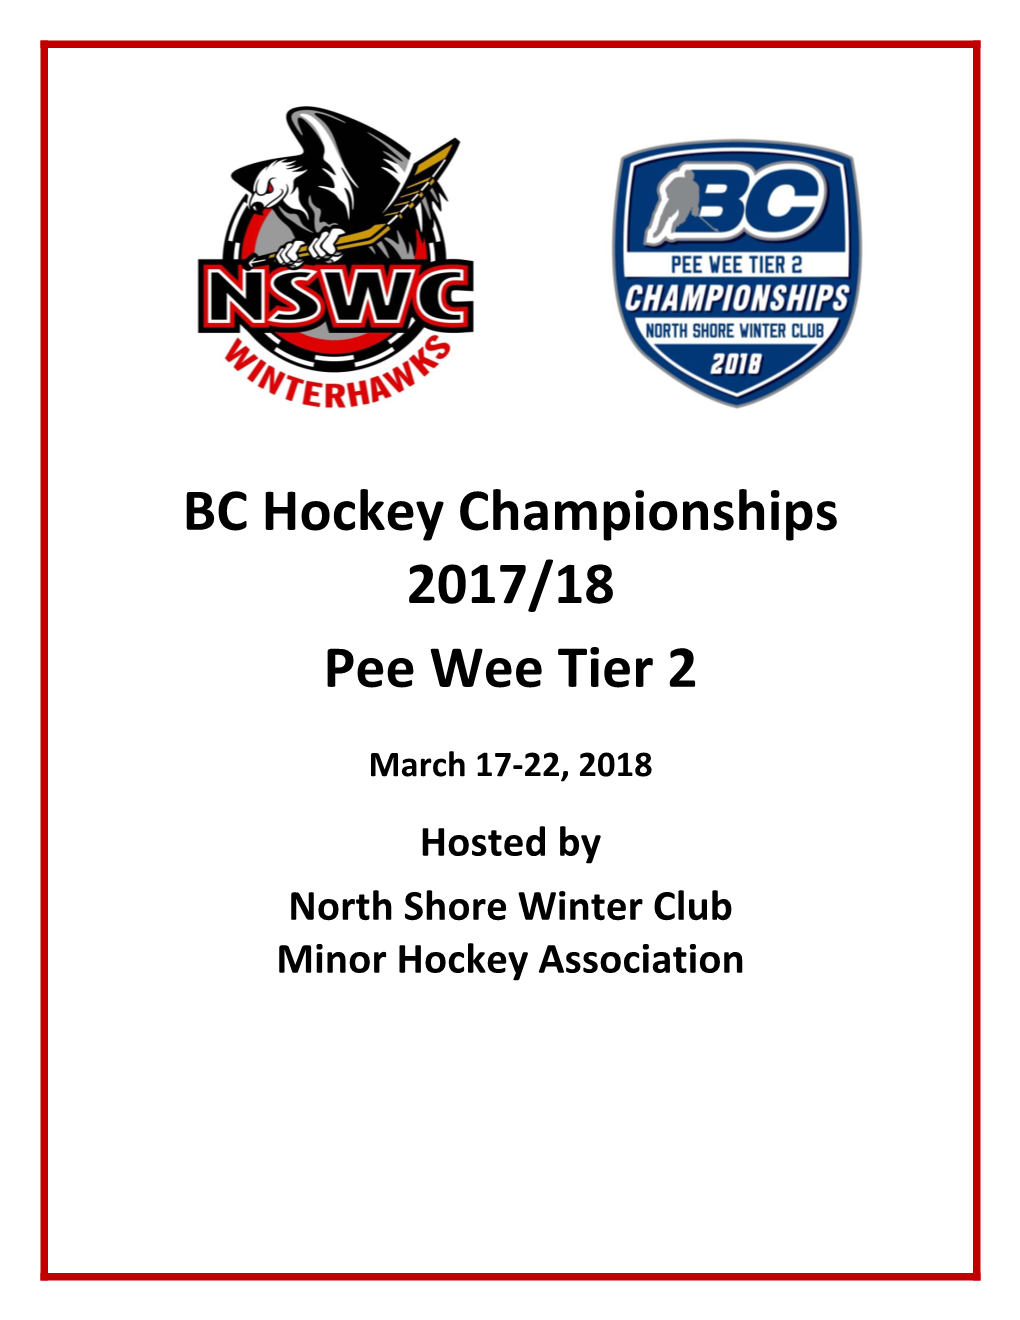 BC Hockey Championships 2017/18 Pee Wee Tier 2